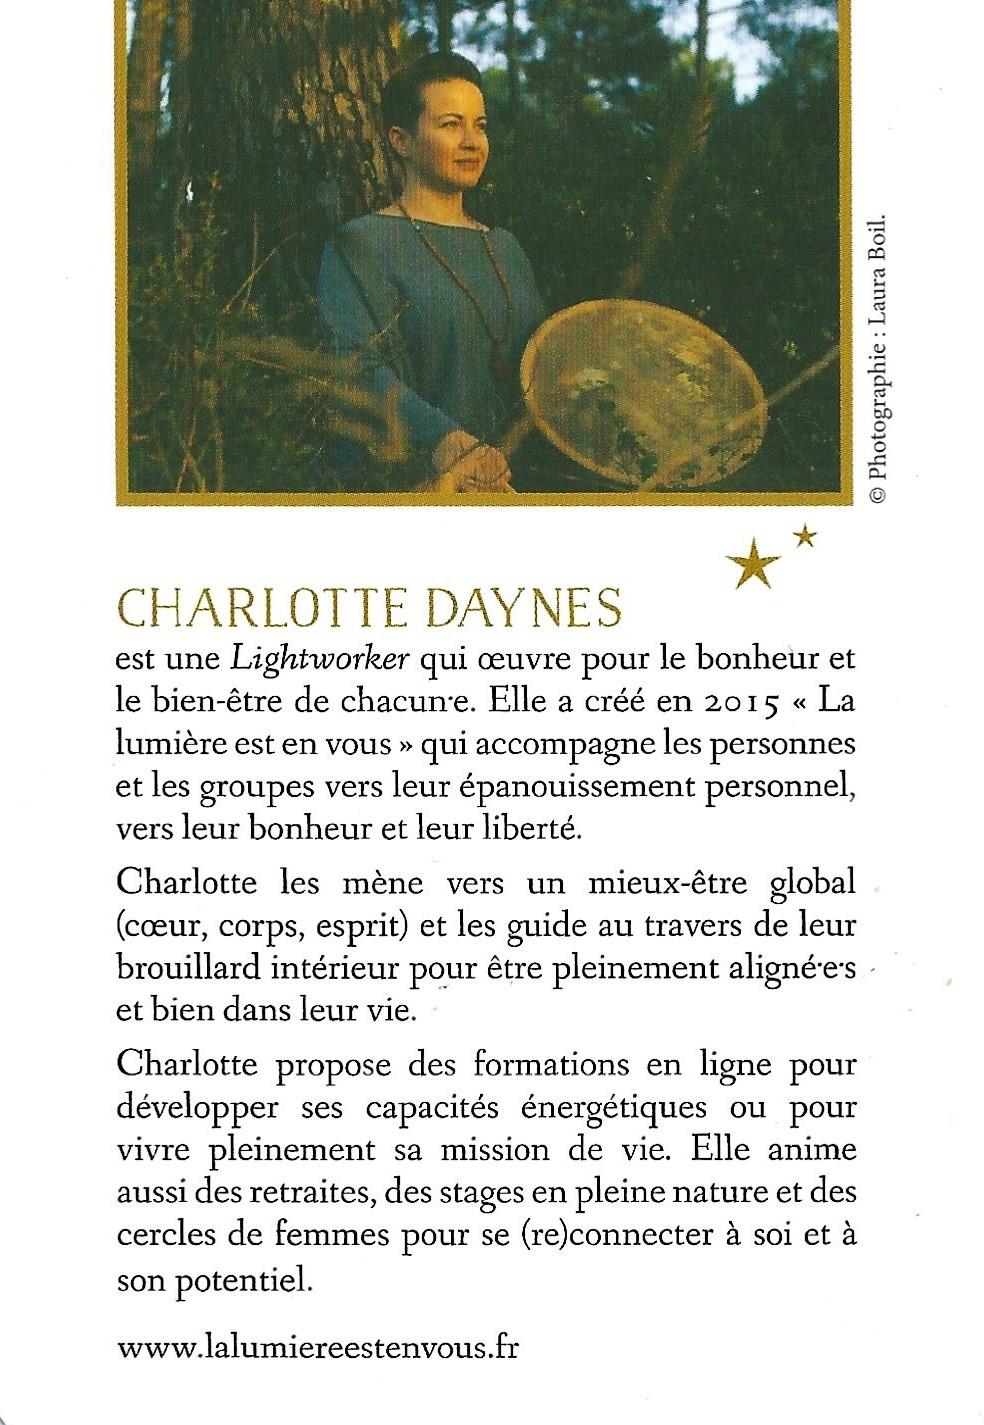 Charlotte daynes